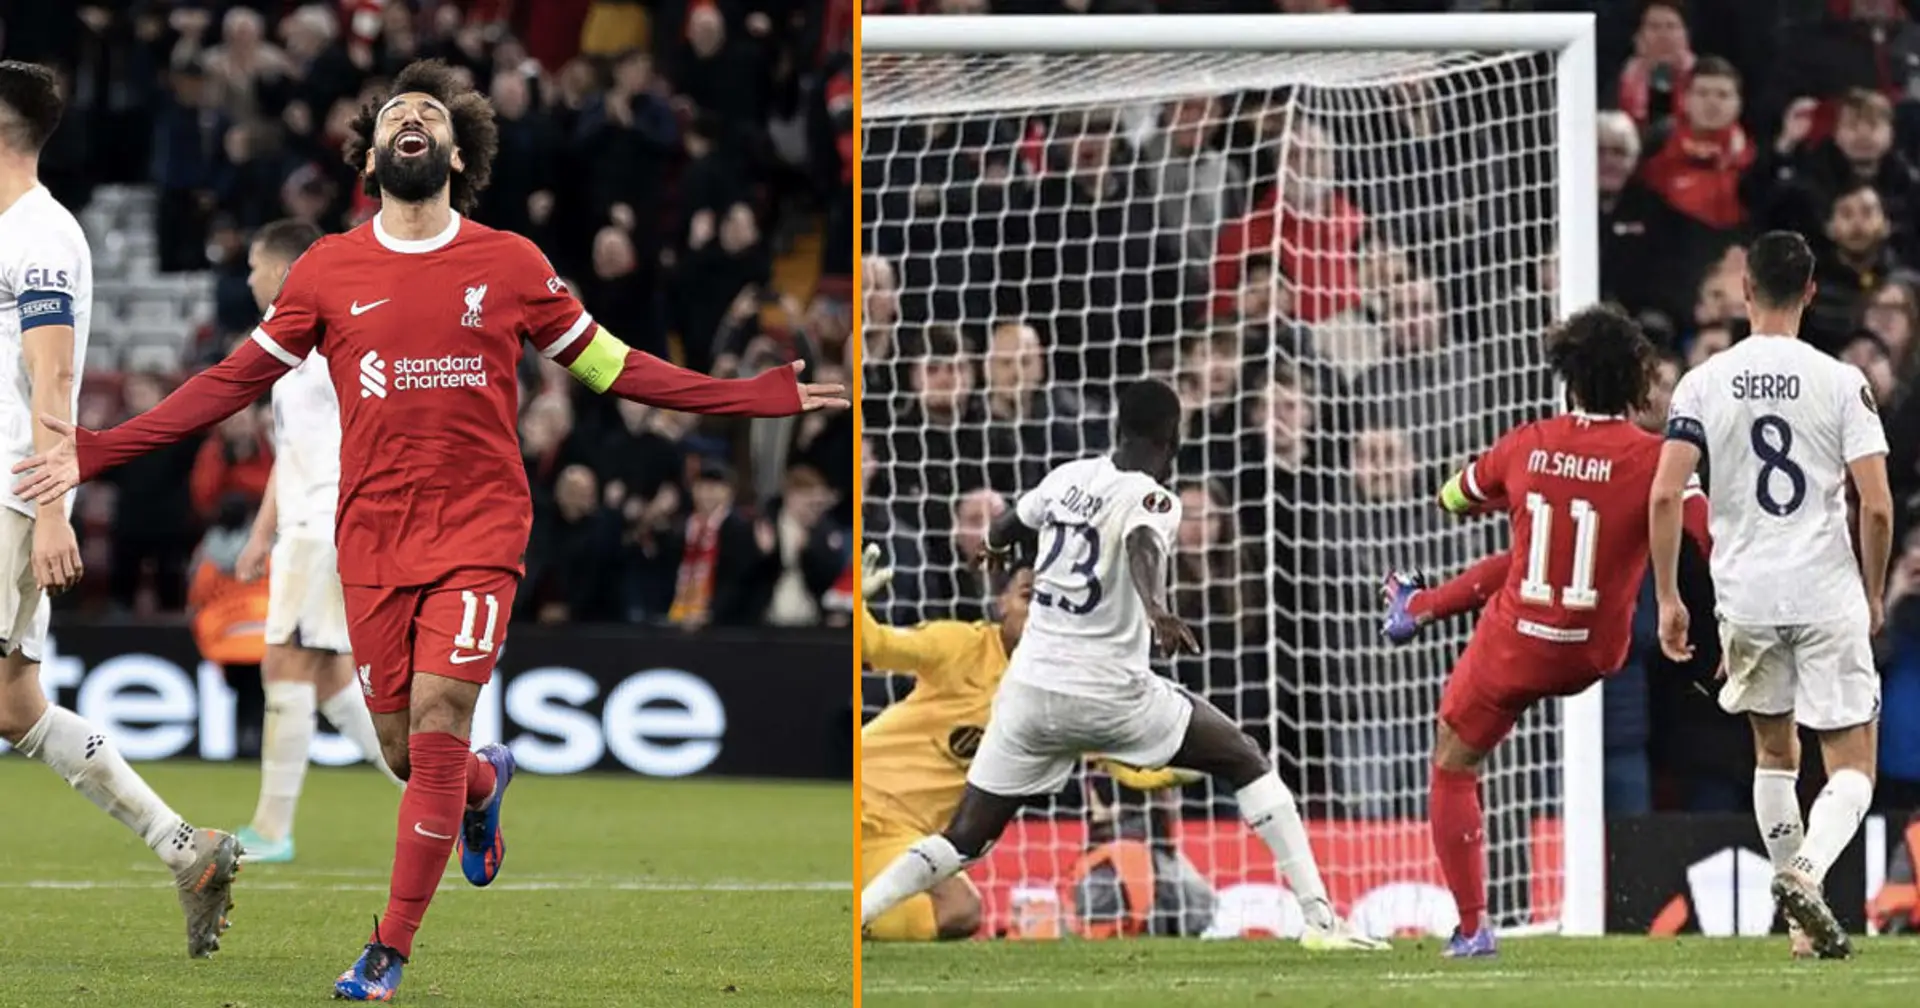 Salah sets new English record with rare goal